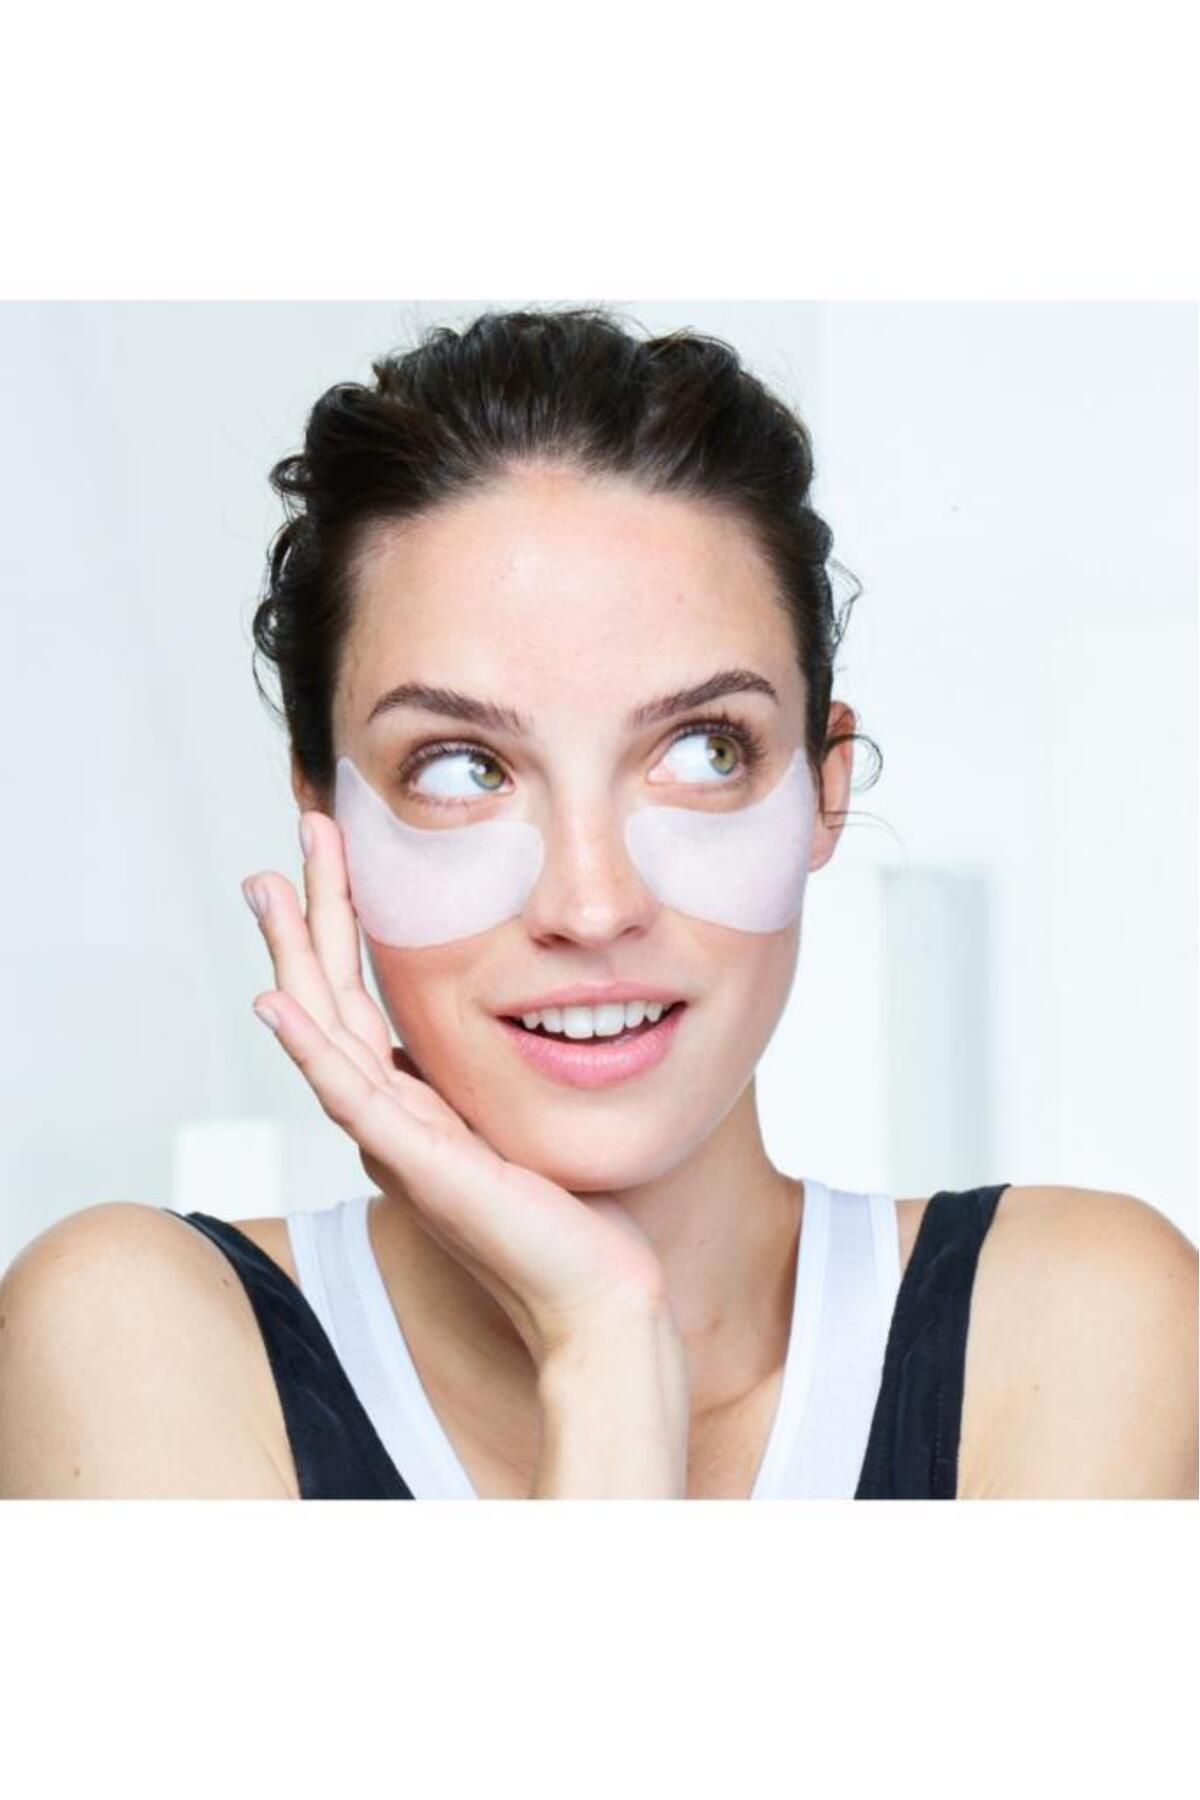 Garnier بسته 5 ماسک کاغذی مراقبت از پوست در خانه